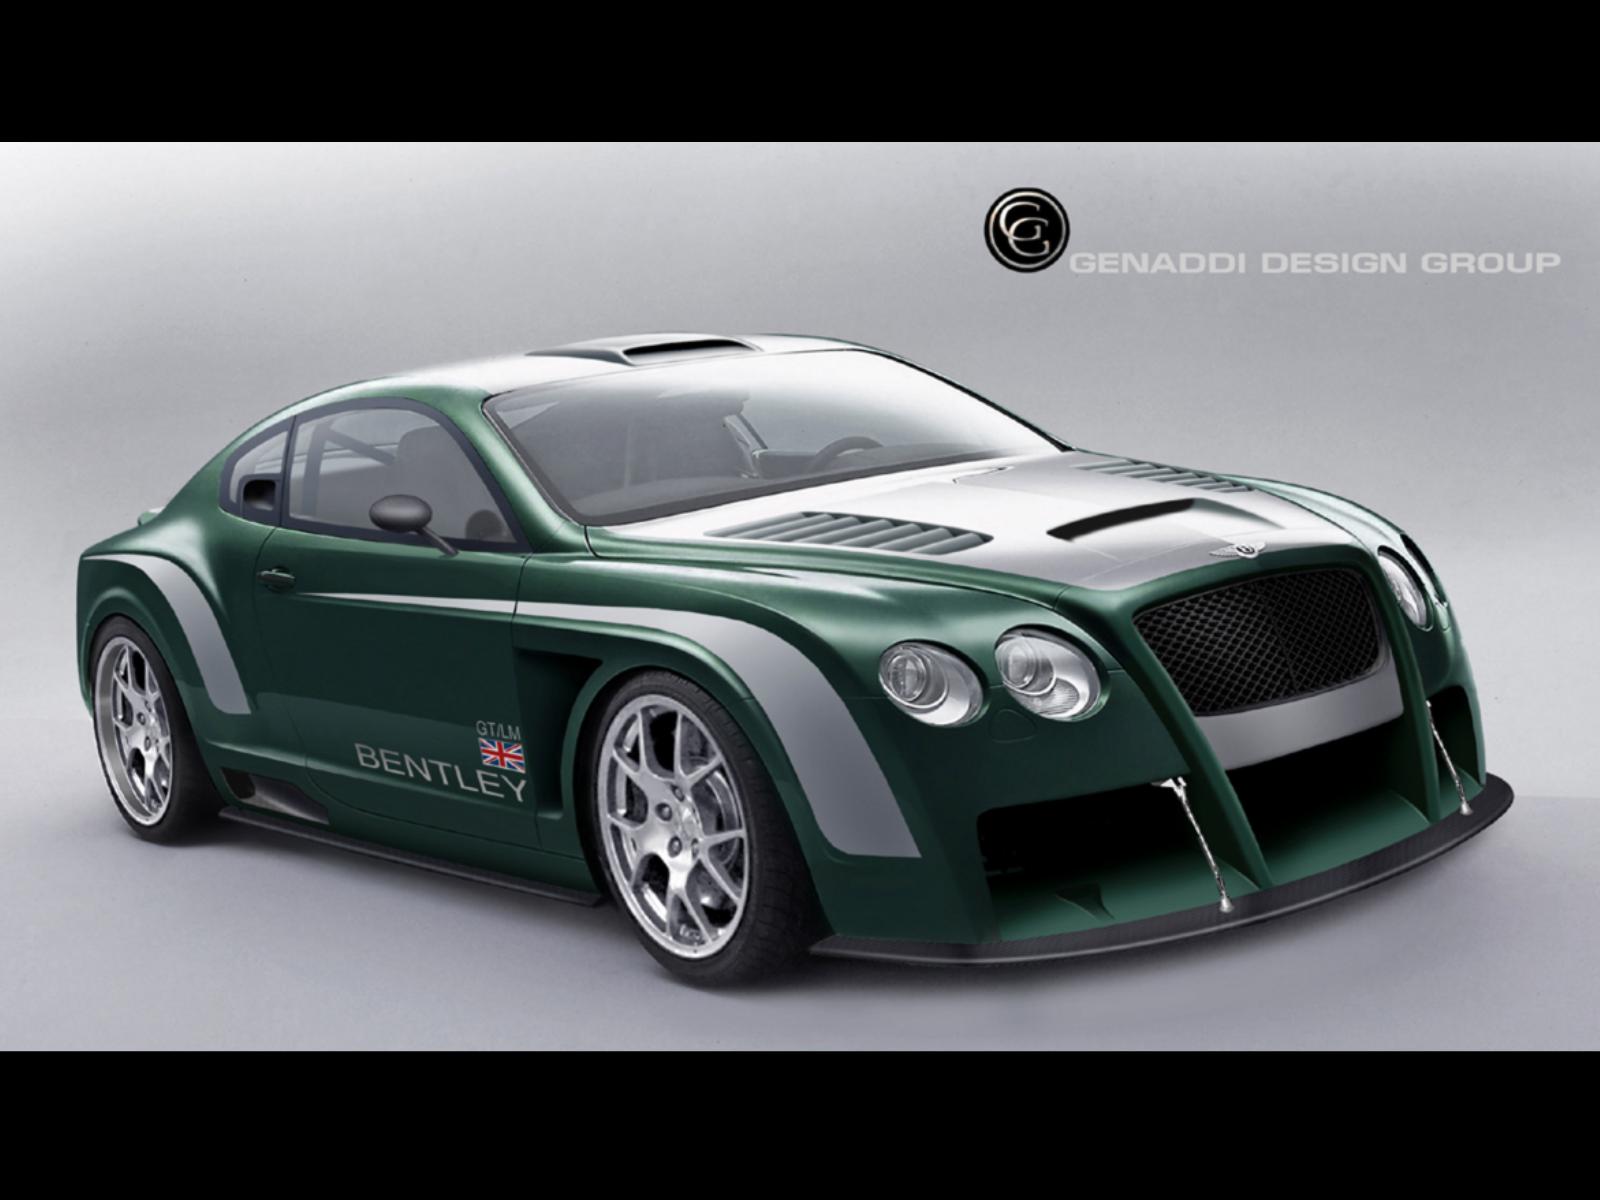 Genaddi Design Bentley Continental GT/LM photo 17319